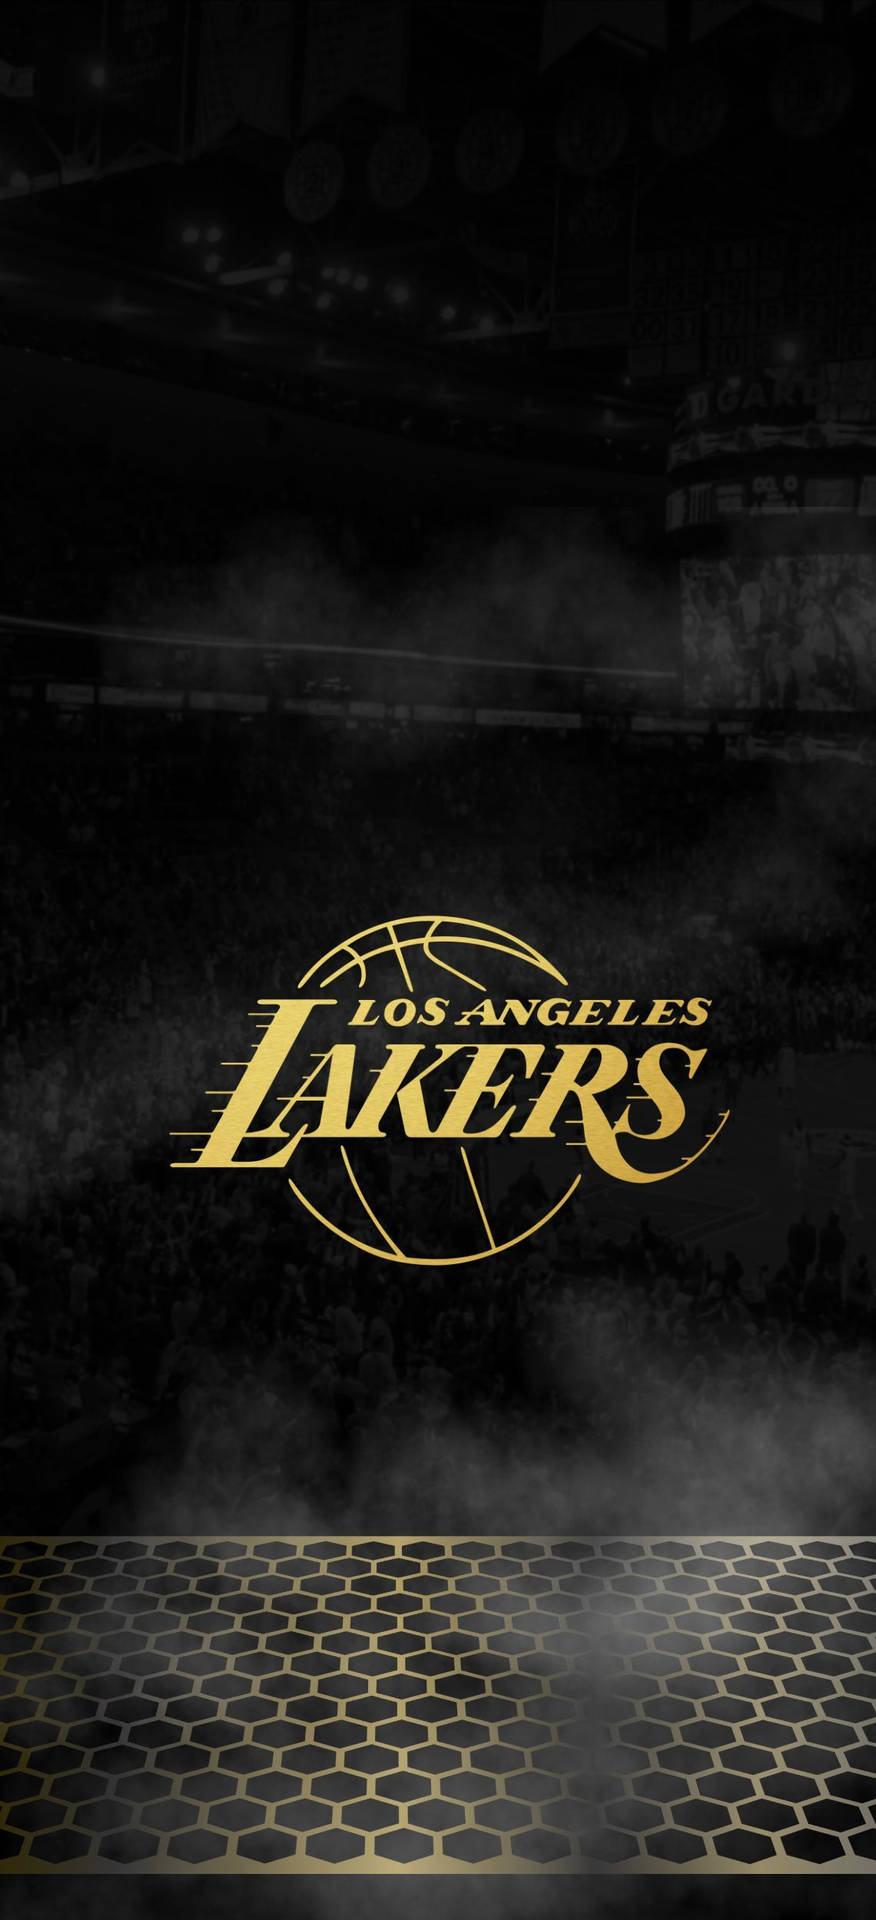 Vis din Lakers-stolthet med det perfekte Lakers-tema iPhone wallpaper. Wallpaper